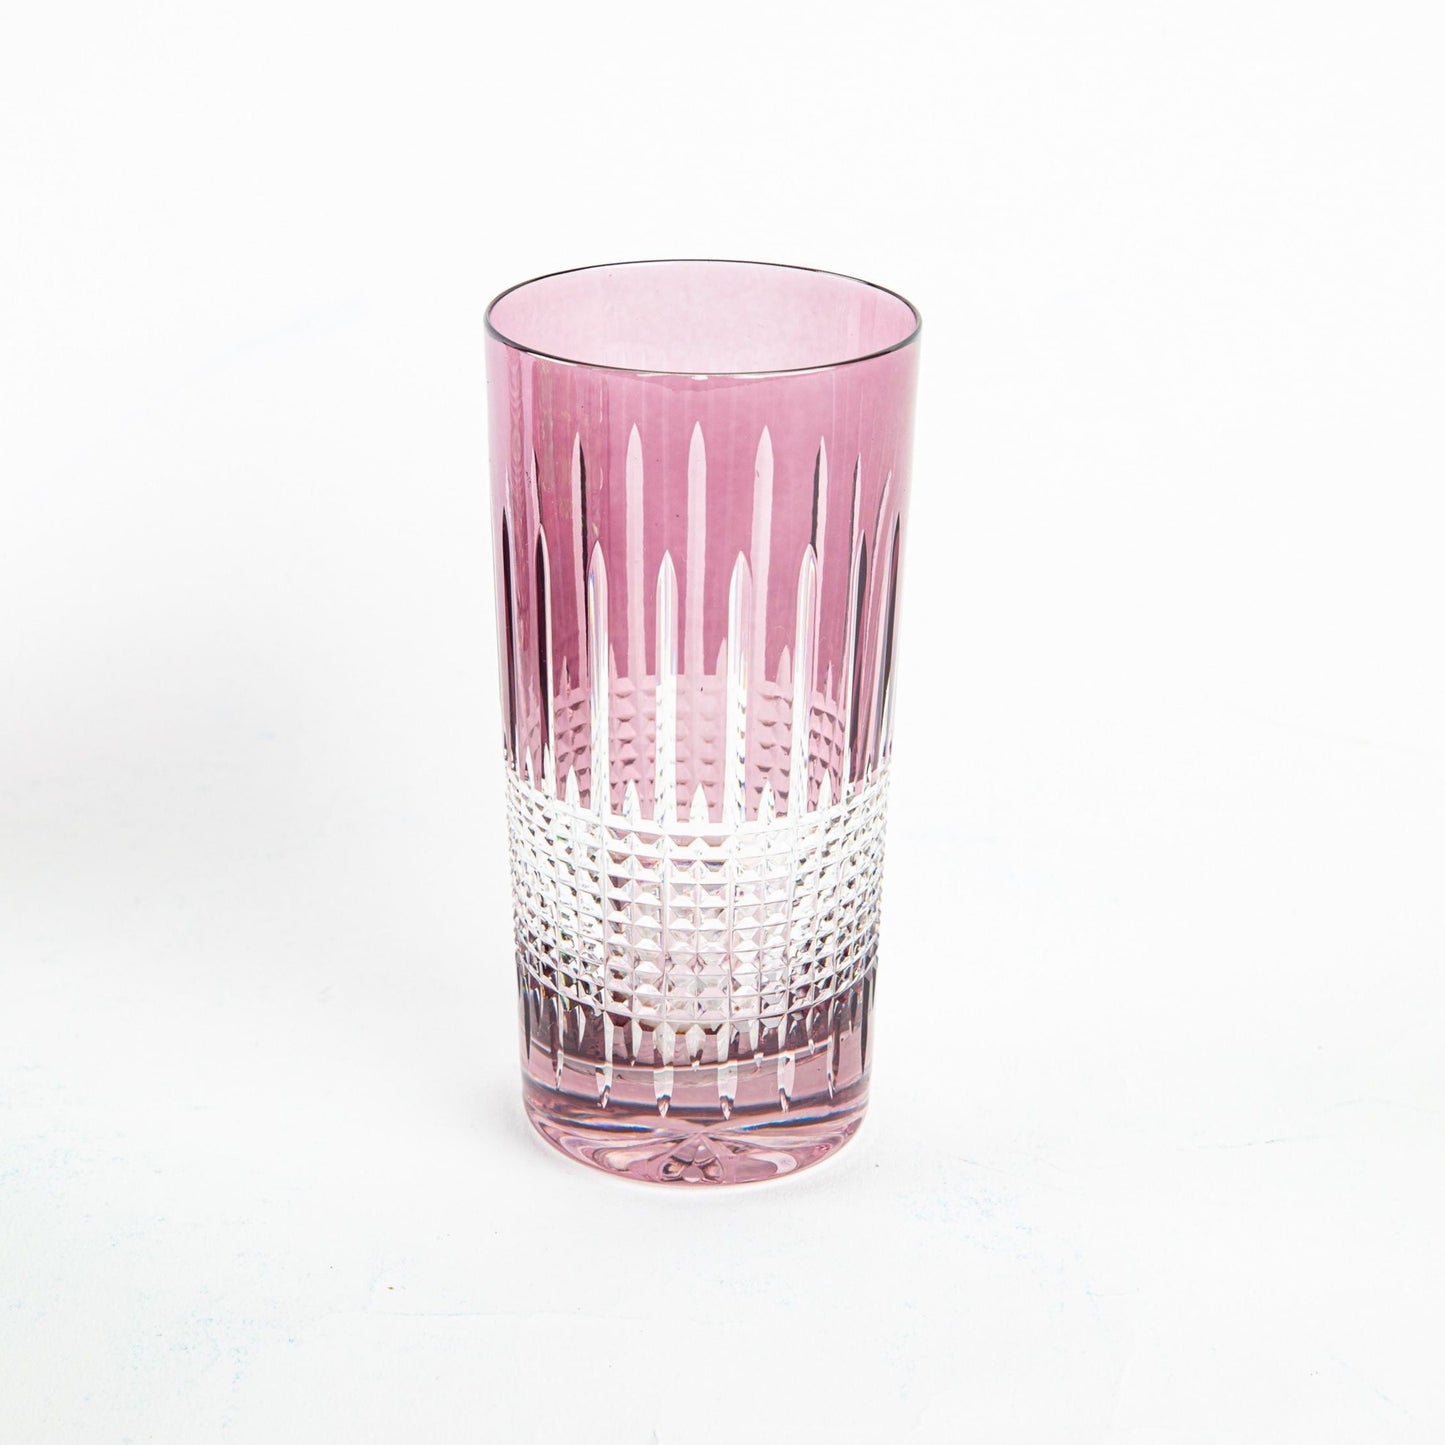 Miecz Crystal Lavender HighBall Glasses- Set of 2